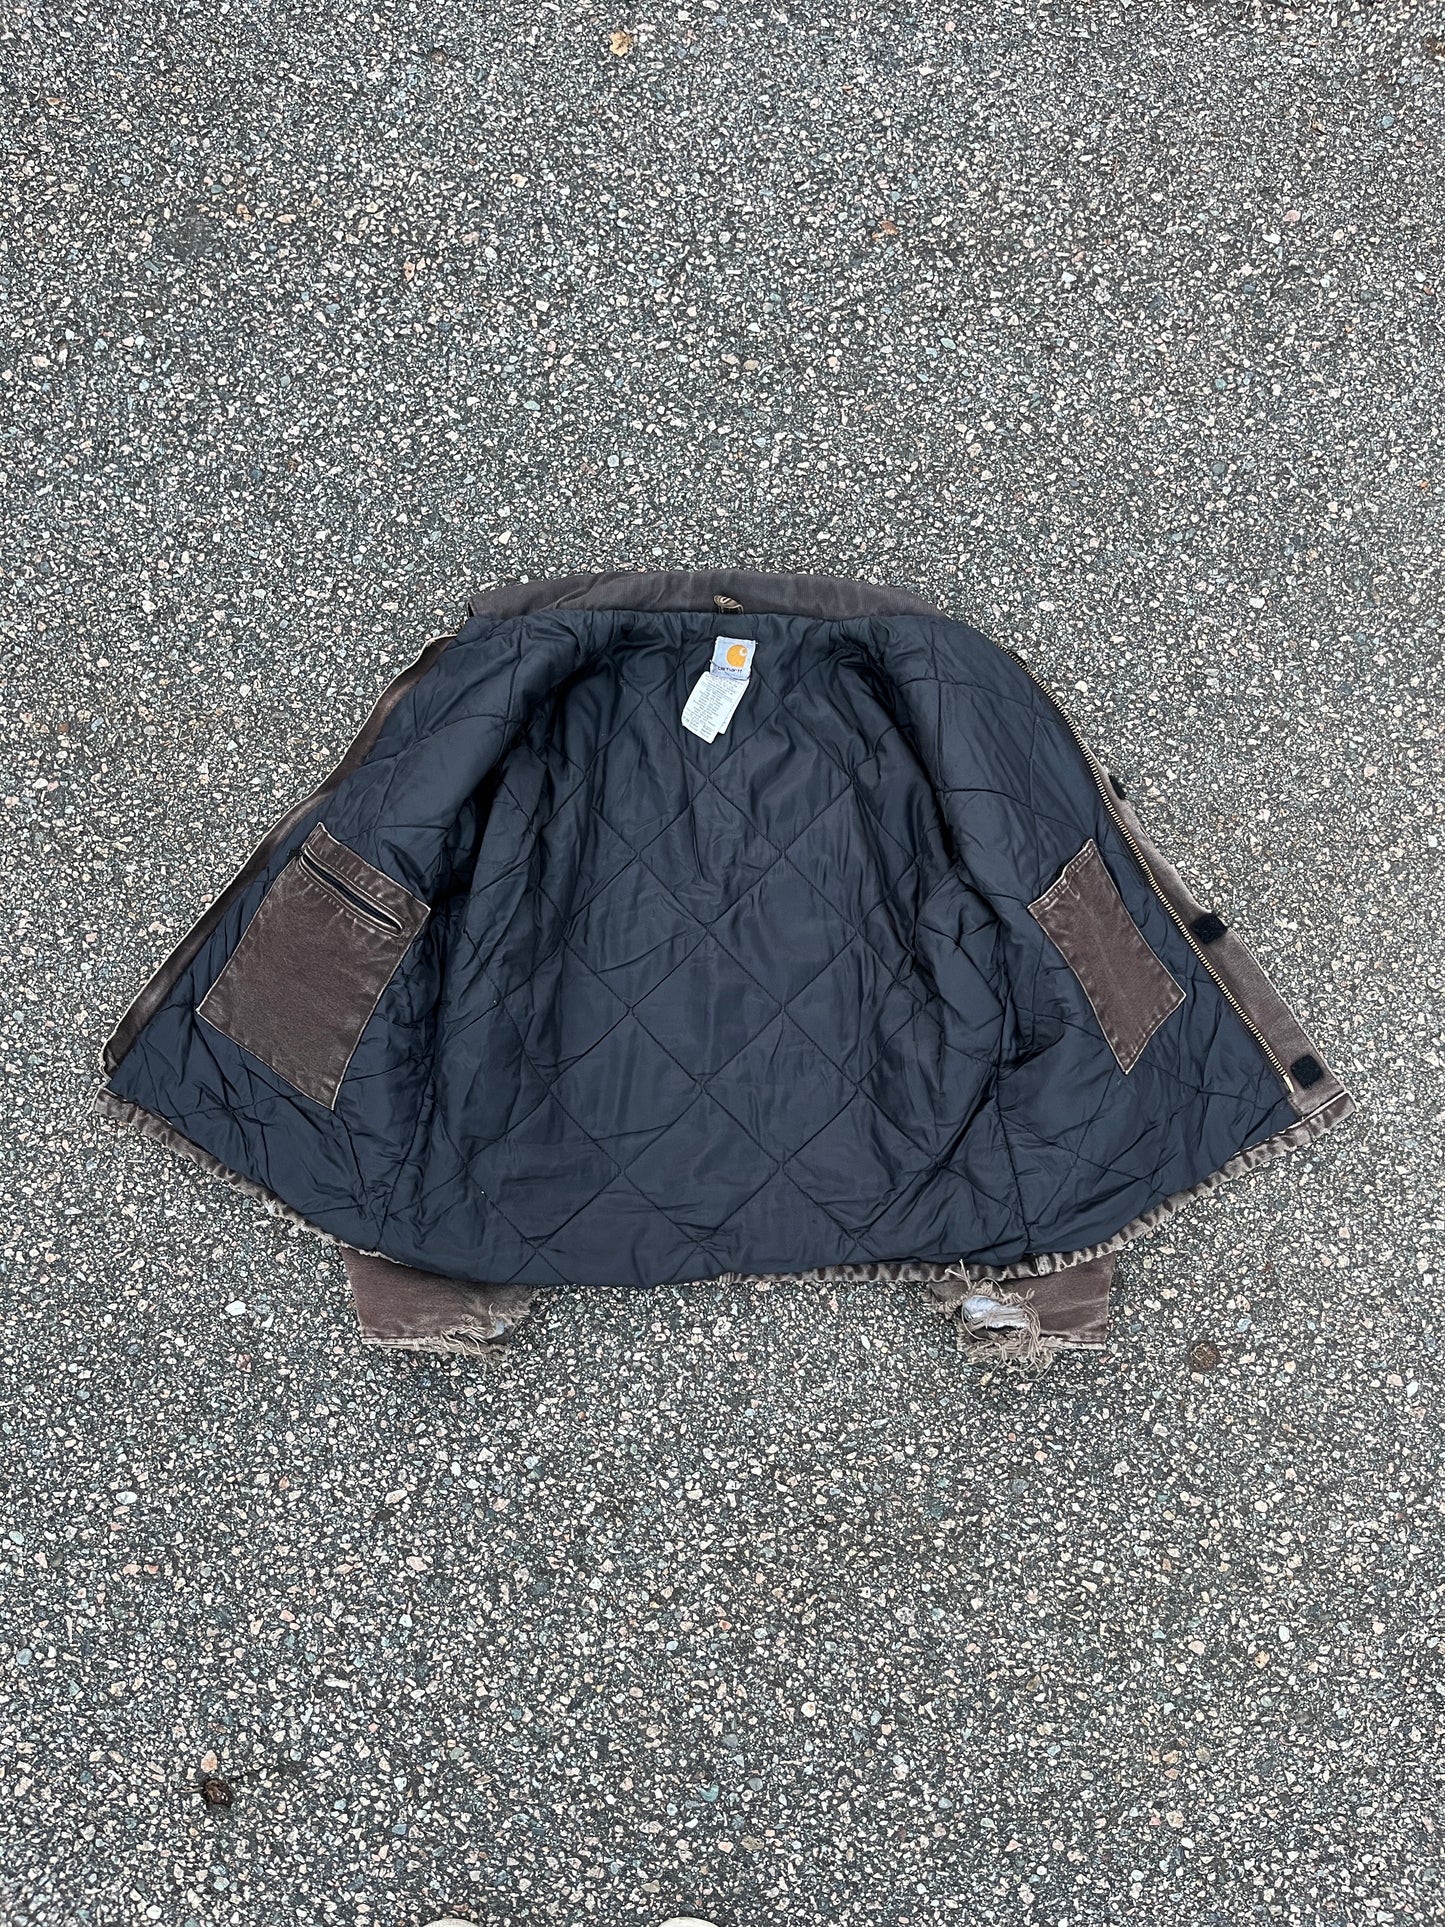 Faded n Distressed Brown Carhartt Arctic Jacket - Medium